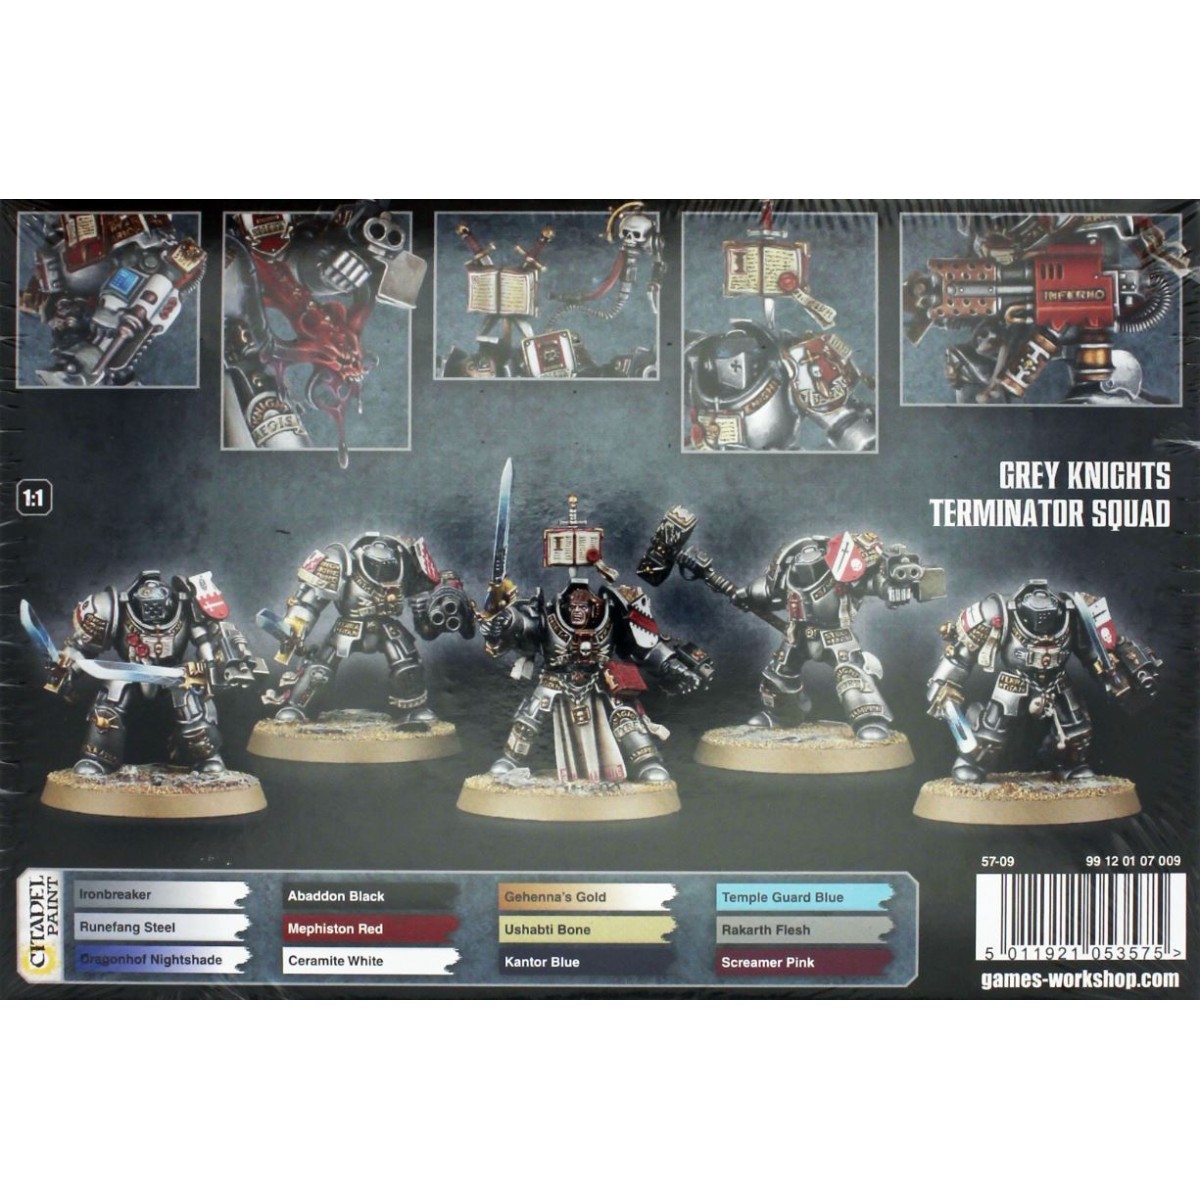 Grey Knights Paladin Squad / Paladins 57-09 Brand New! Warhammer 40k 